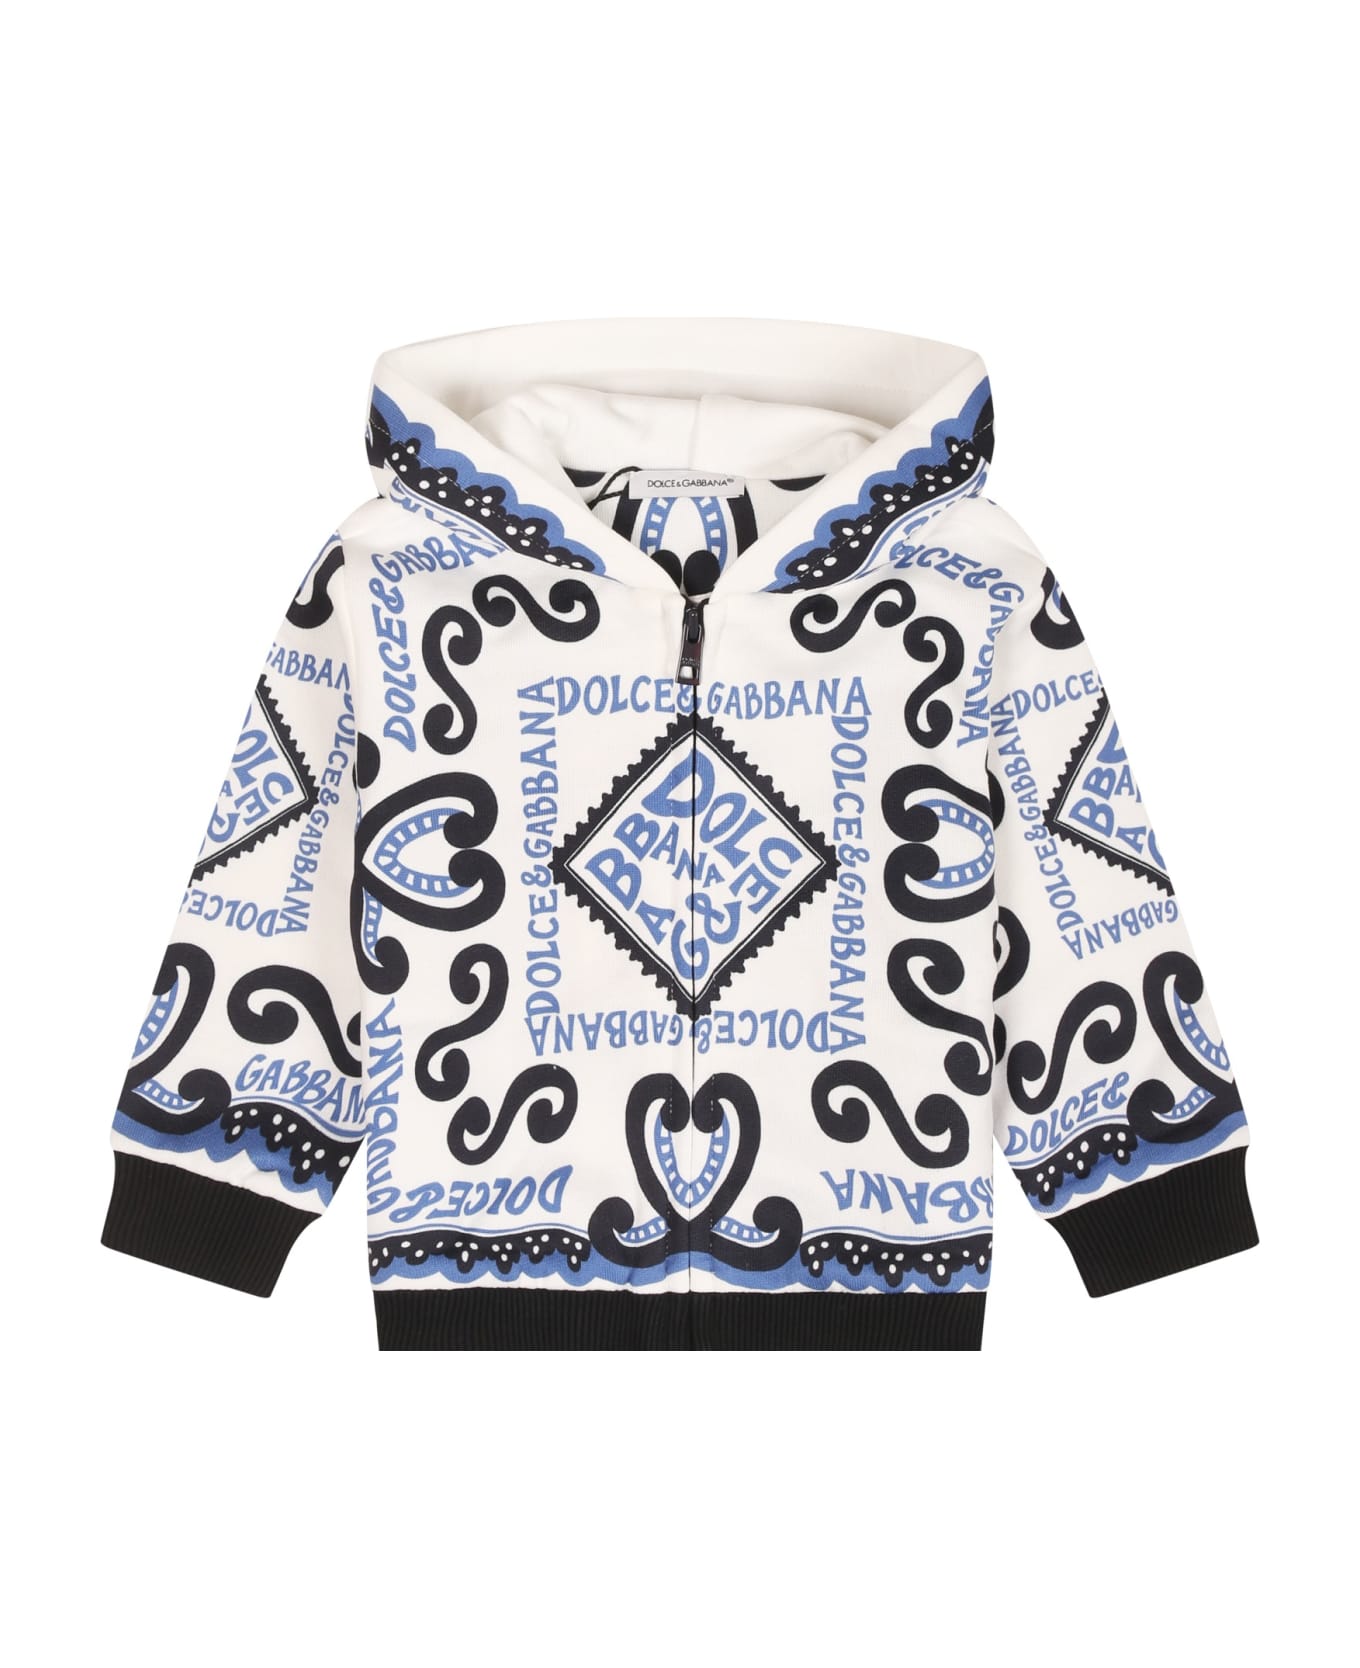 Dolce & Gabbana White Sweatshirt For Baby Boy With Bandana Print And Logo - White